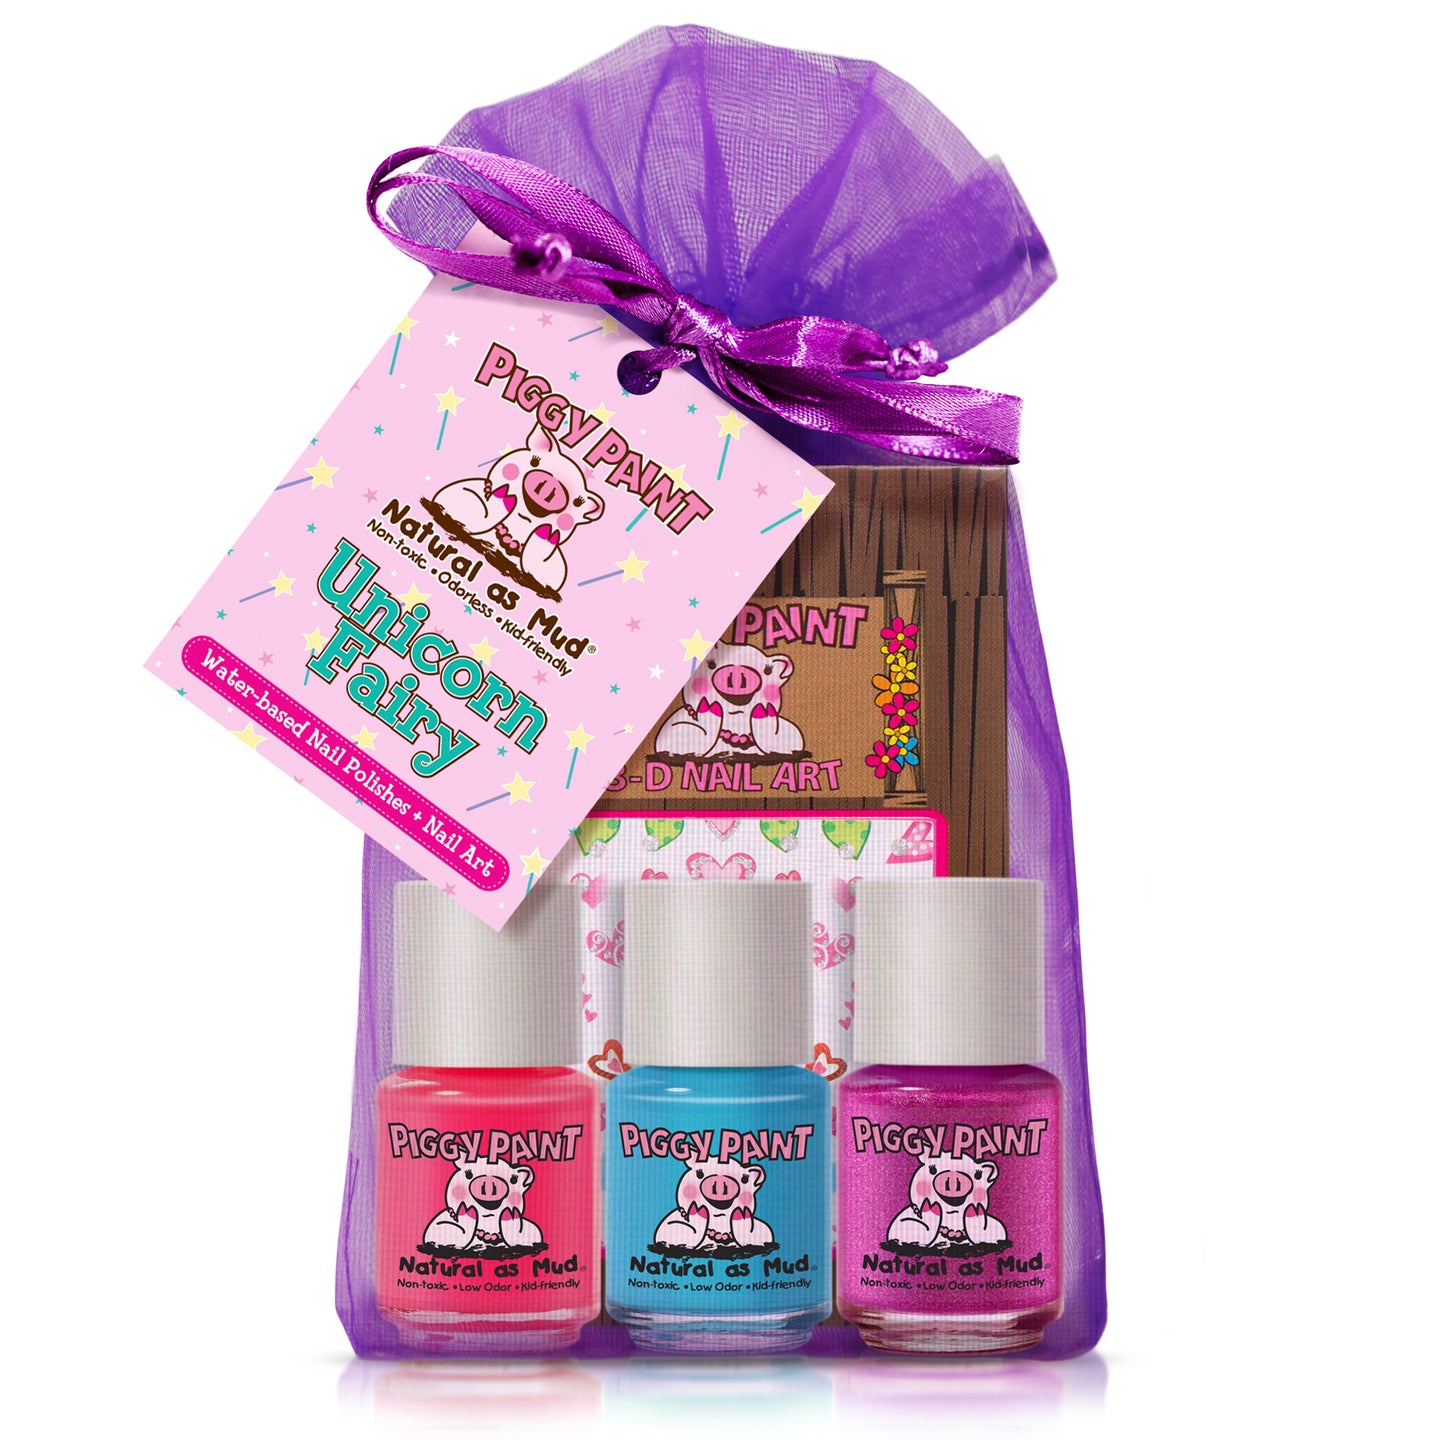 Piggy Paint Nail Polish Gift Set : Unicorn Fairy